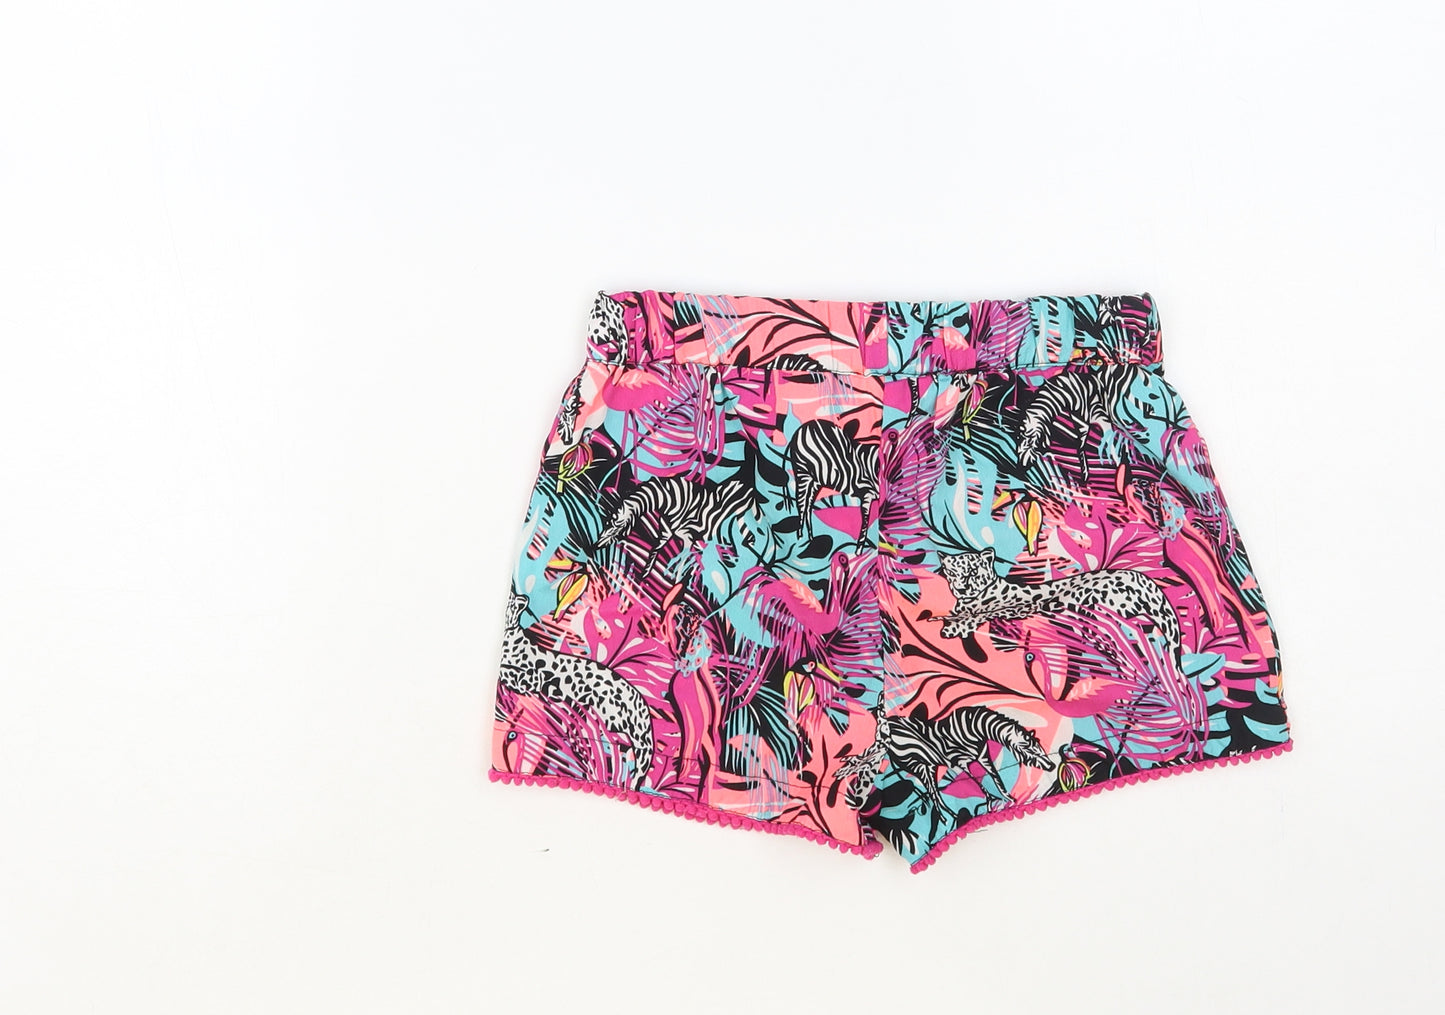 PEP&CO Girls Multicoloured Geometric Polyester Hot Pants Shorts Size 5-6 Years Regular Drawstring - Wild Animals Print